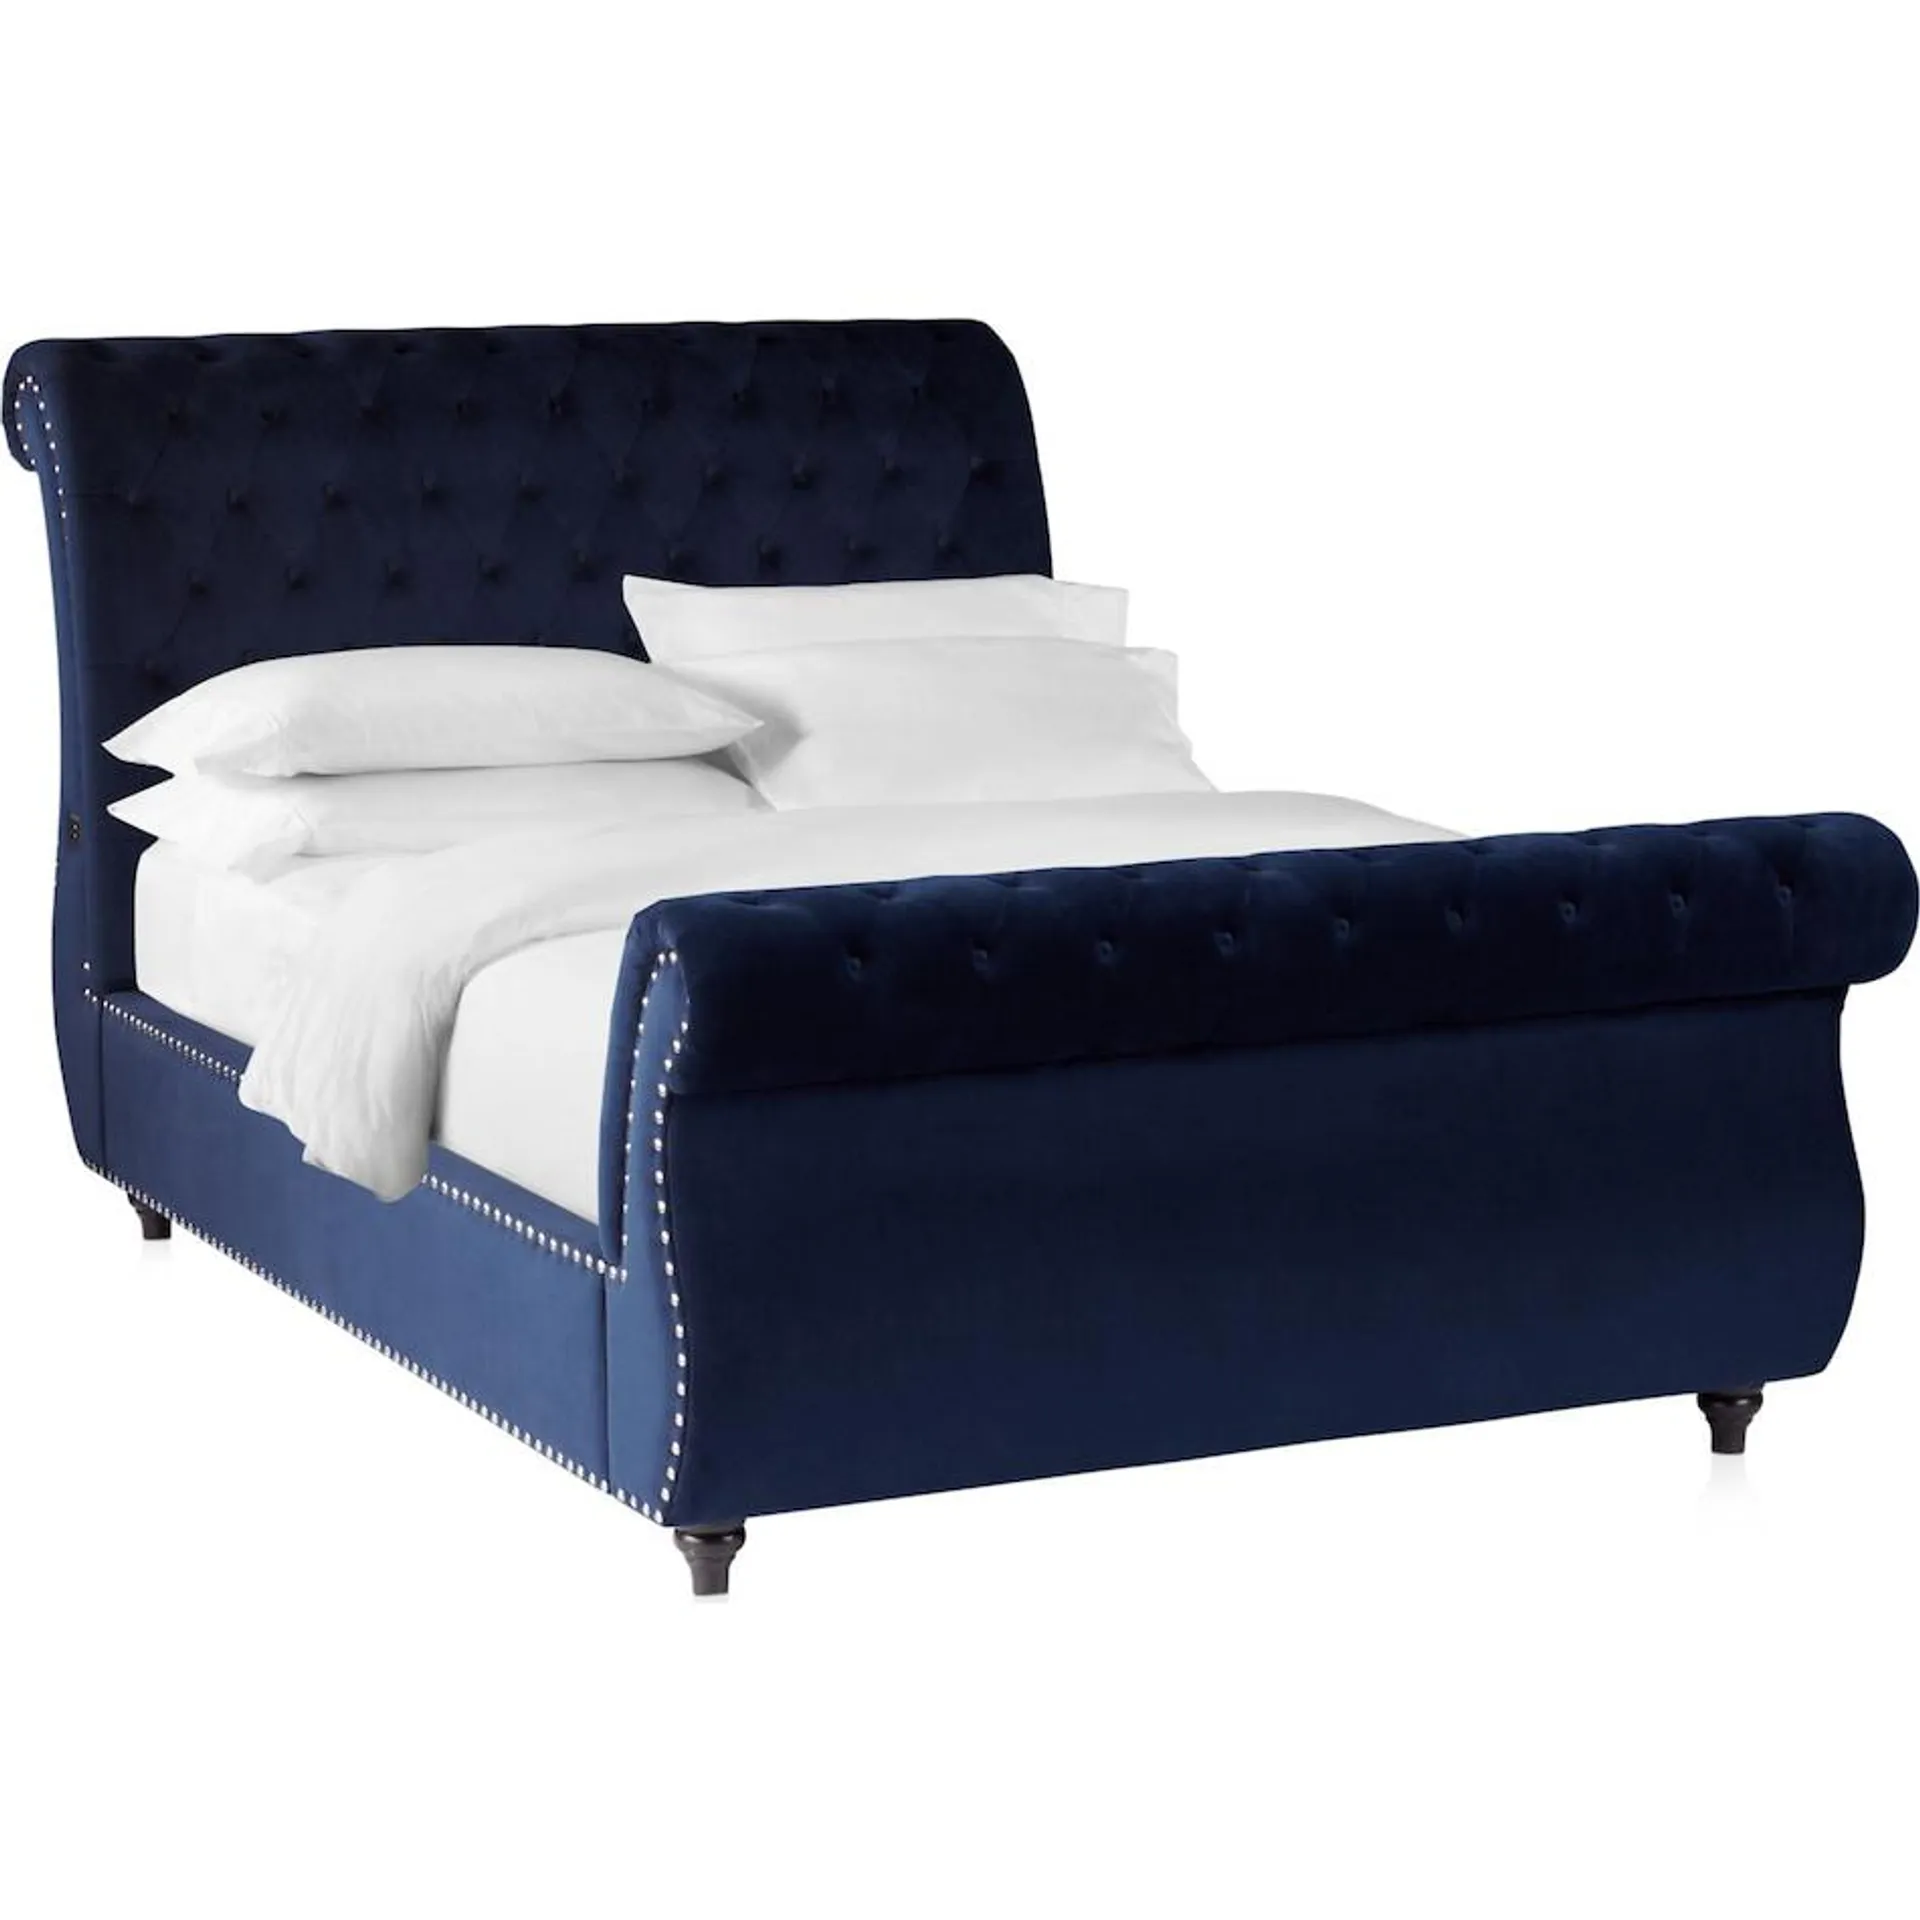 Marcella Upholstered Bed